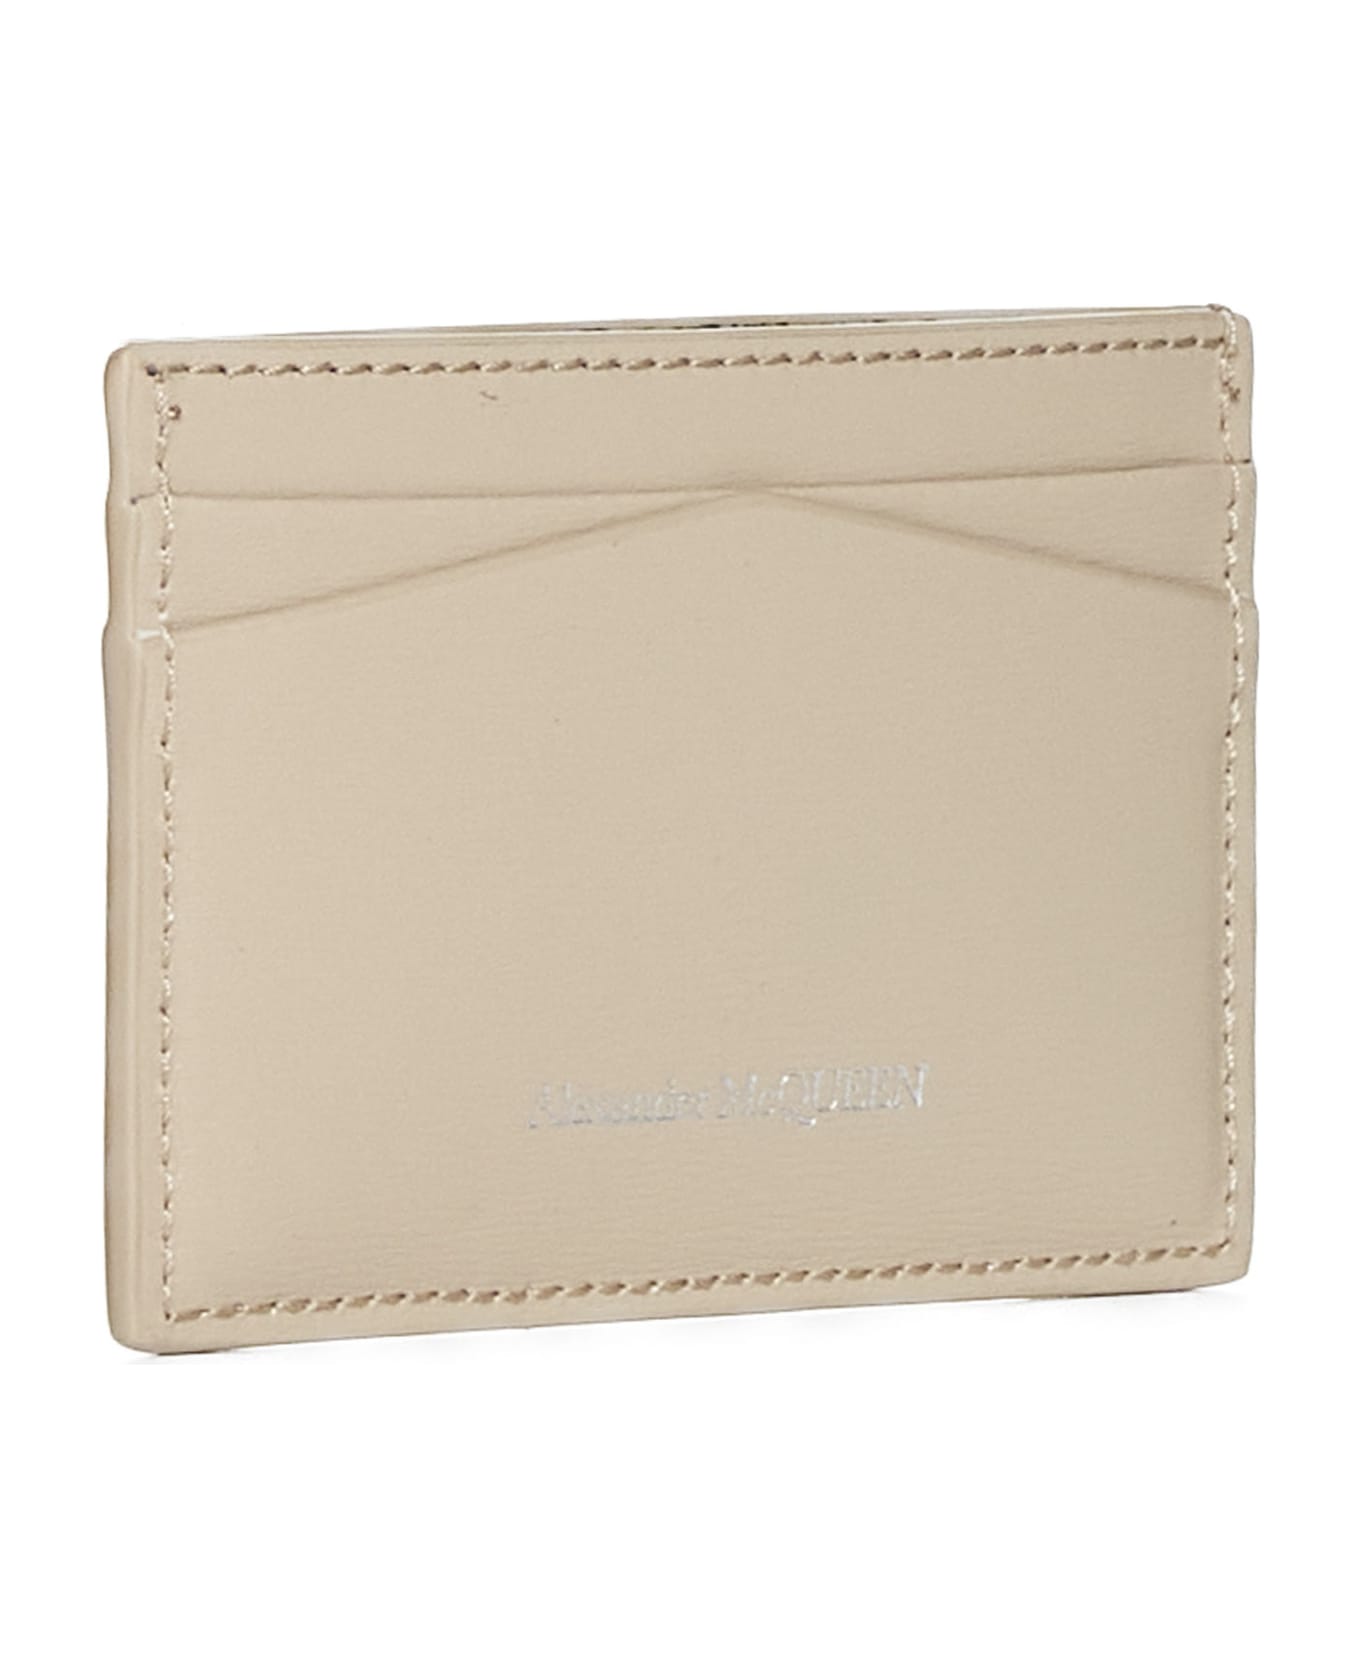 Alexander McQueen Leather Card Holder - Camel 財布